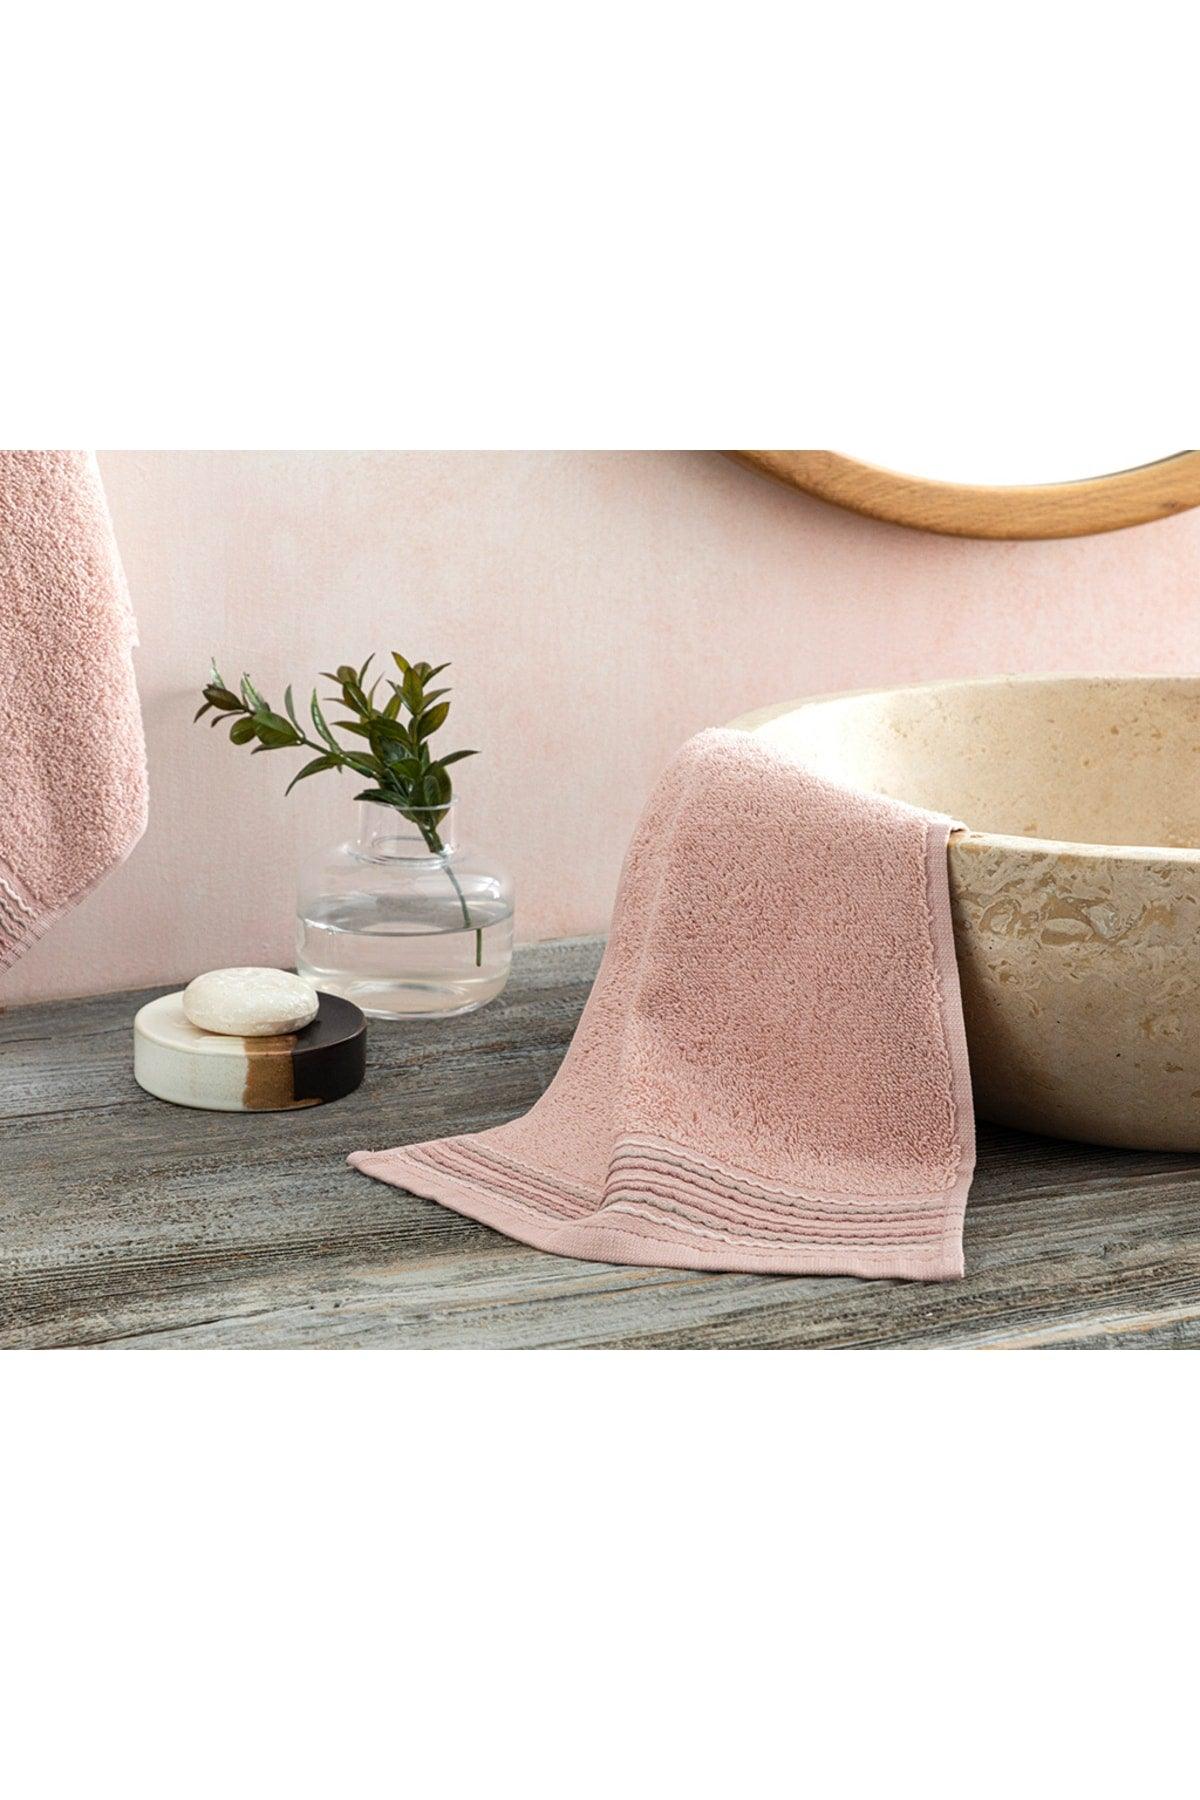 Arıanna Cotton Embroidered Hand Towel 30x40 Cm Pink - Swordslife